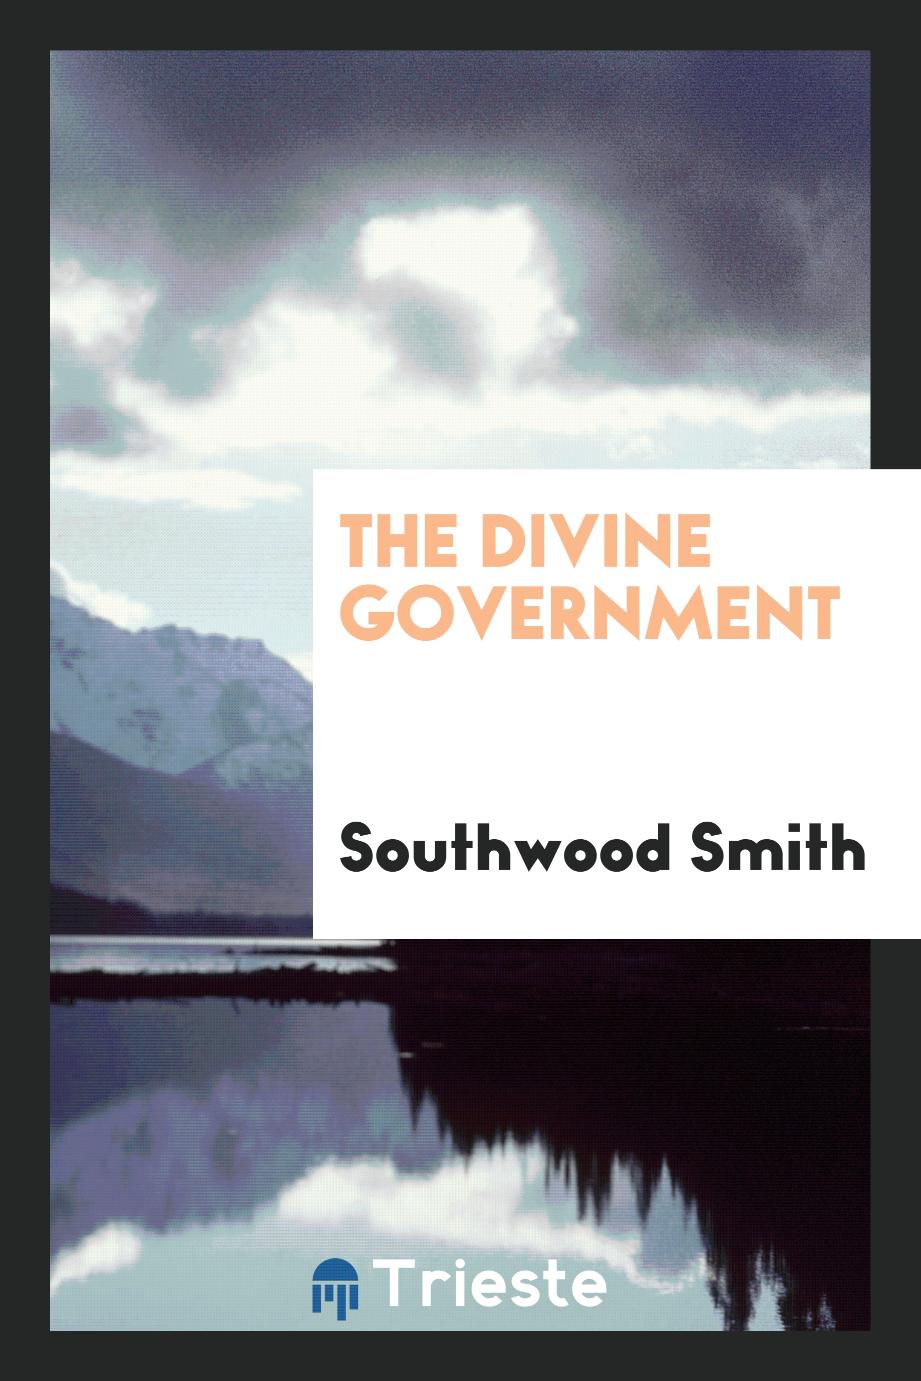 The divine government